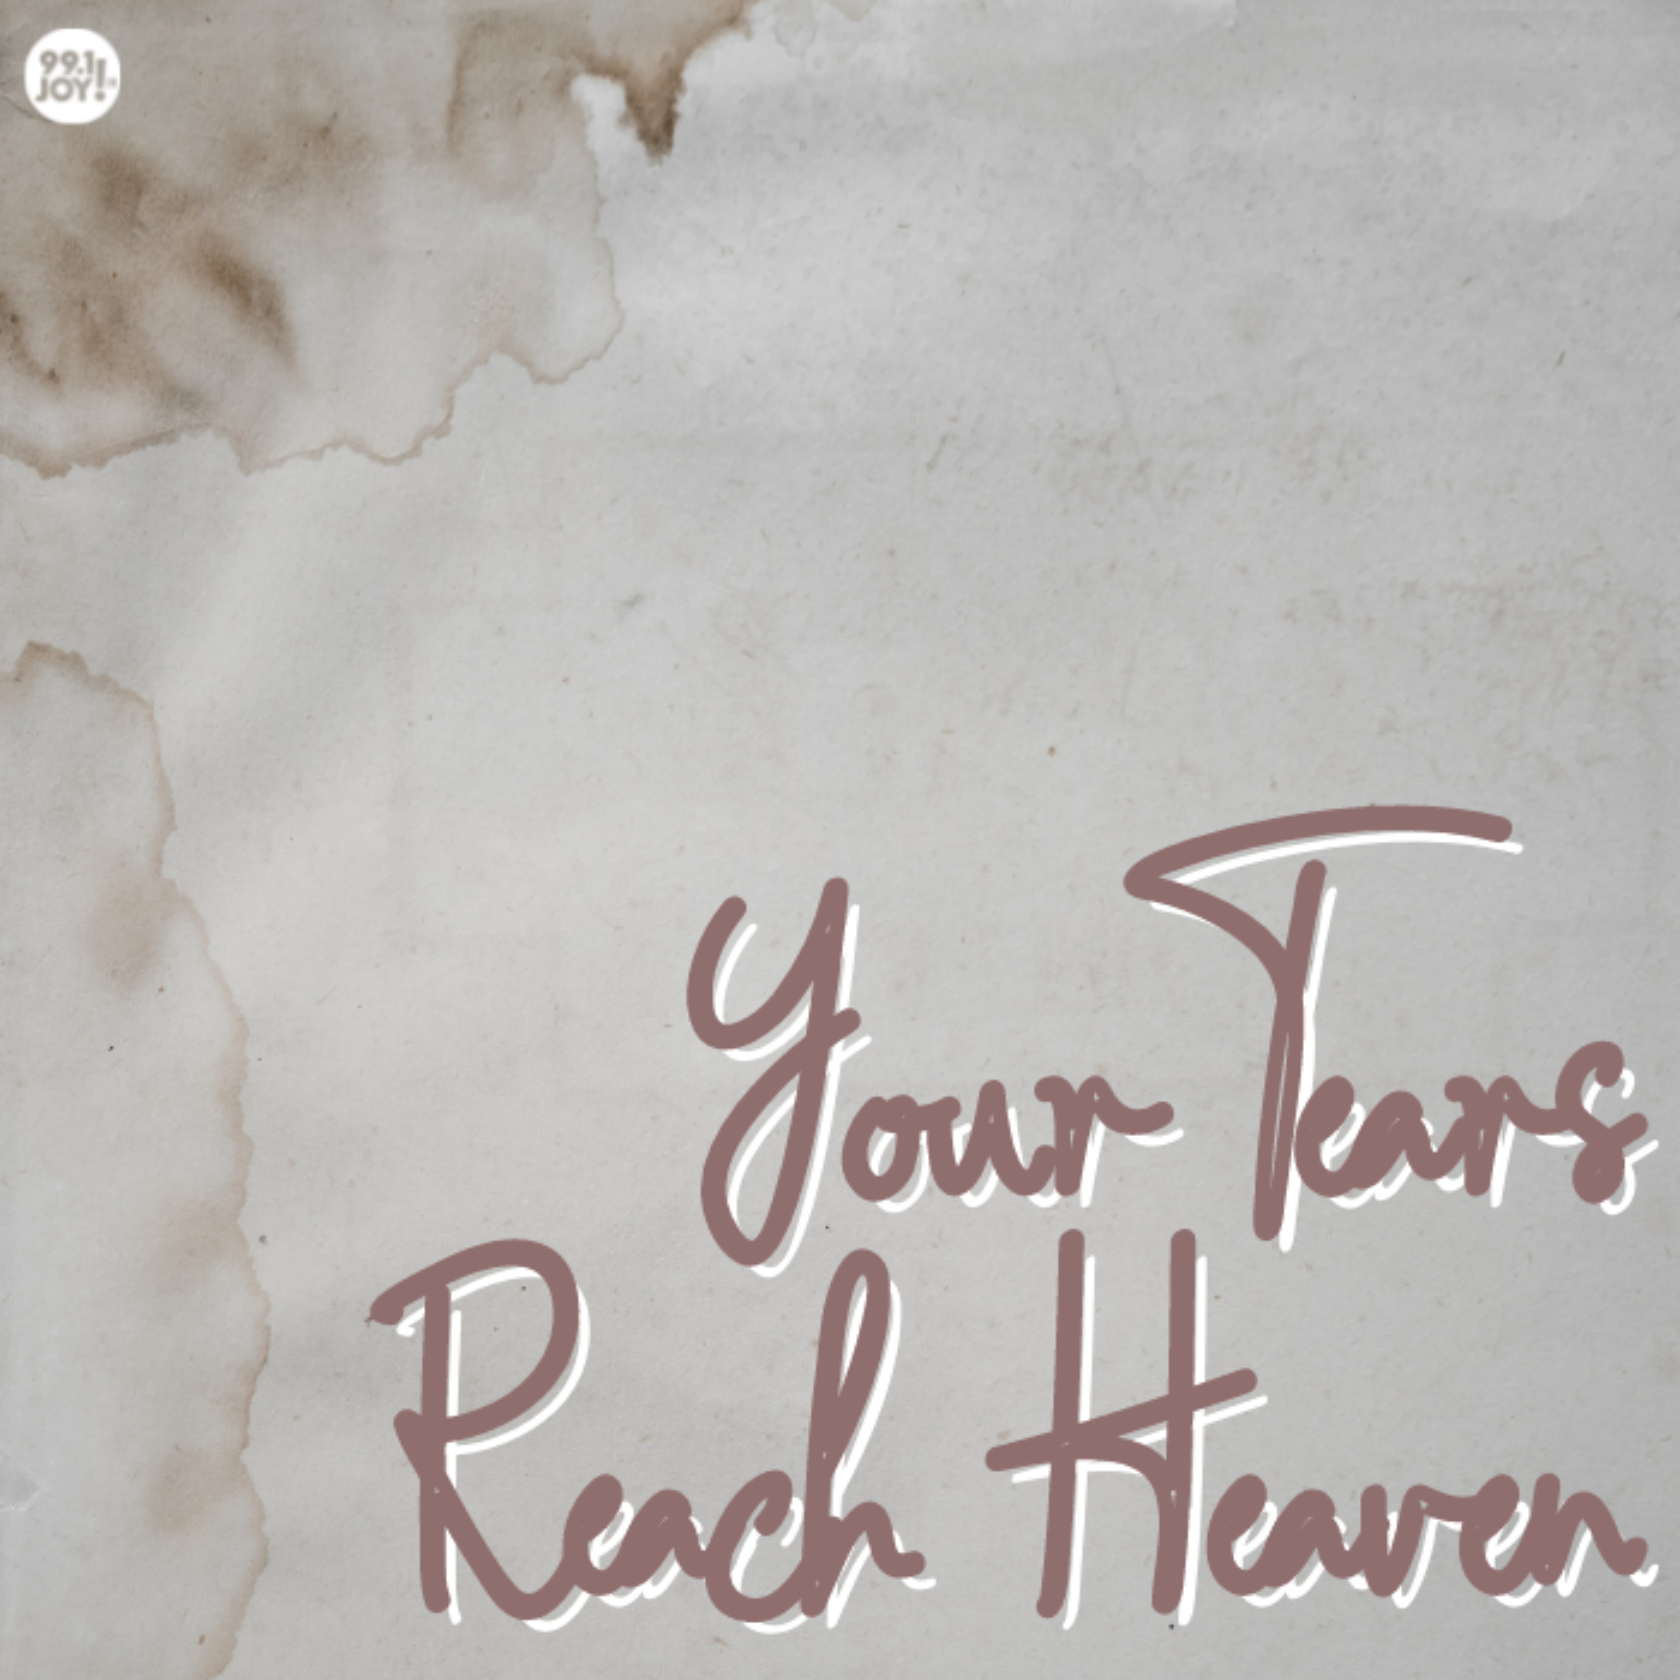 Your Tears Reach Heaven